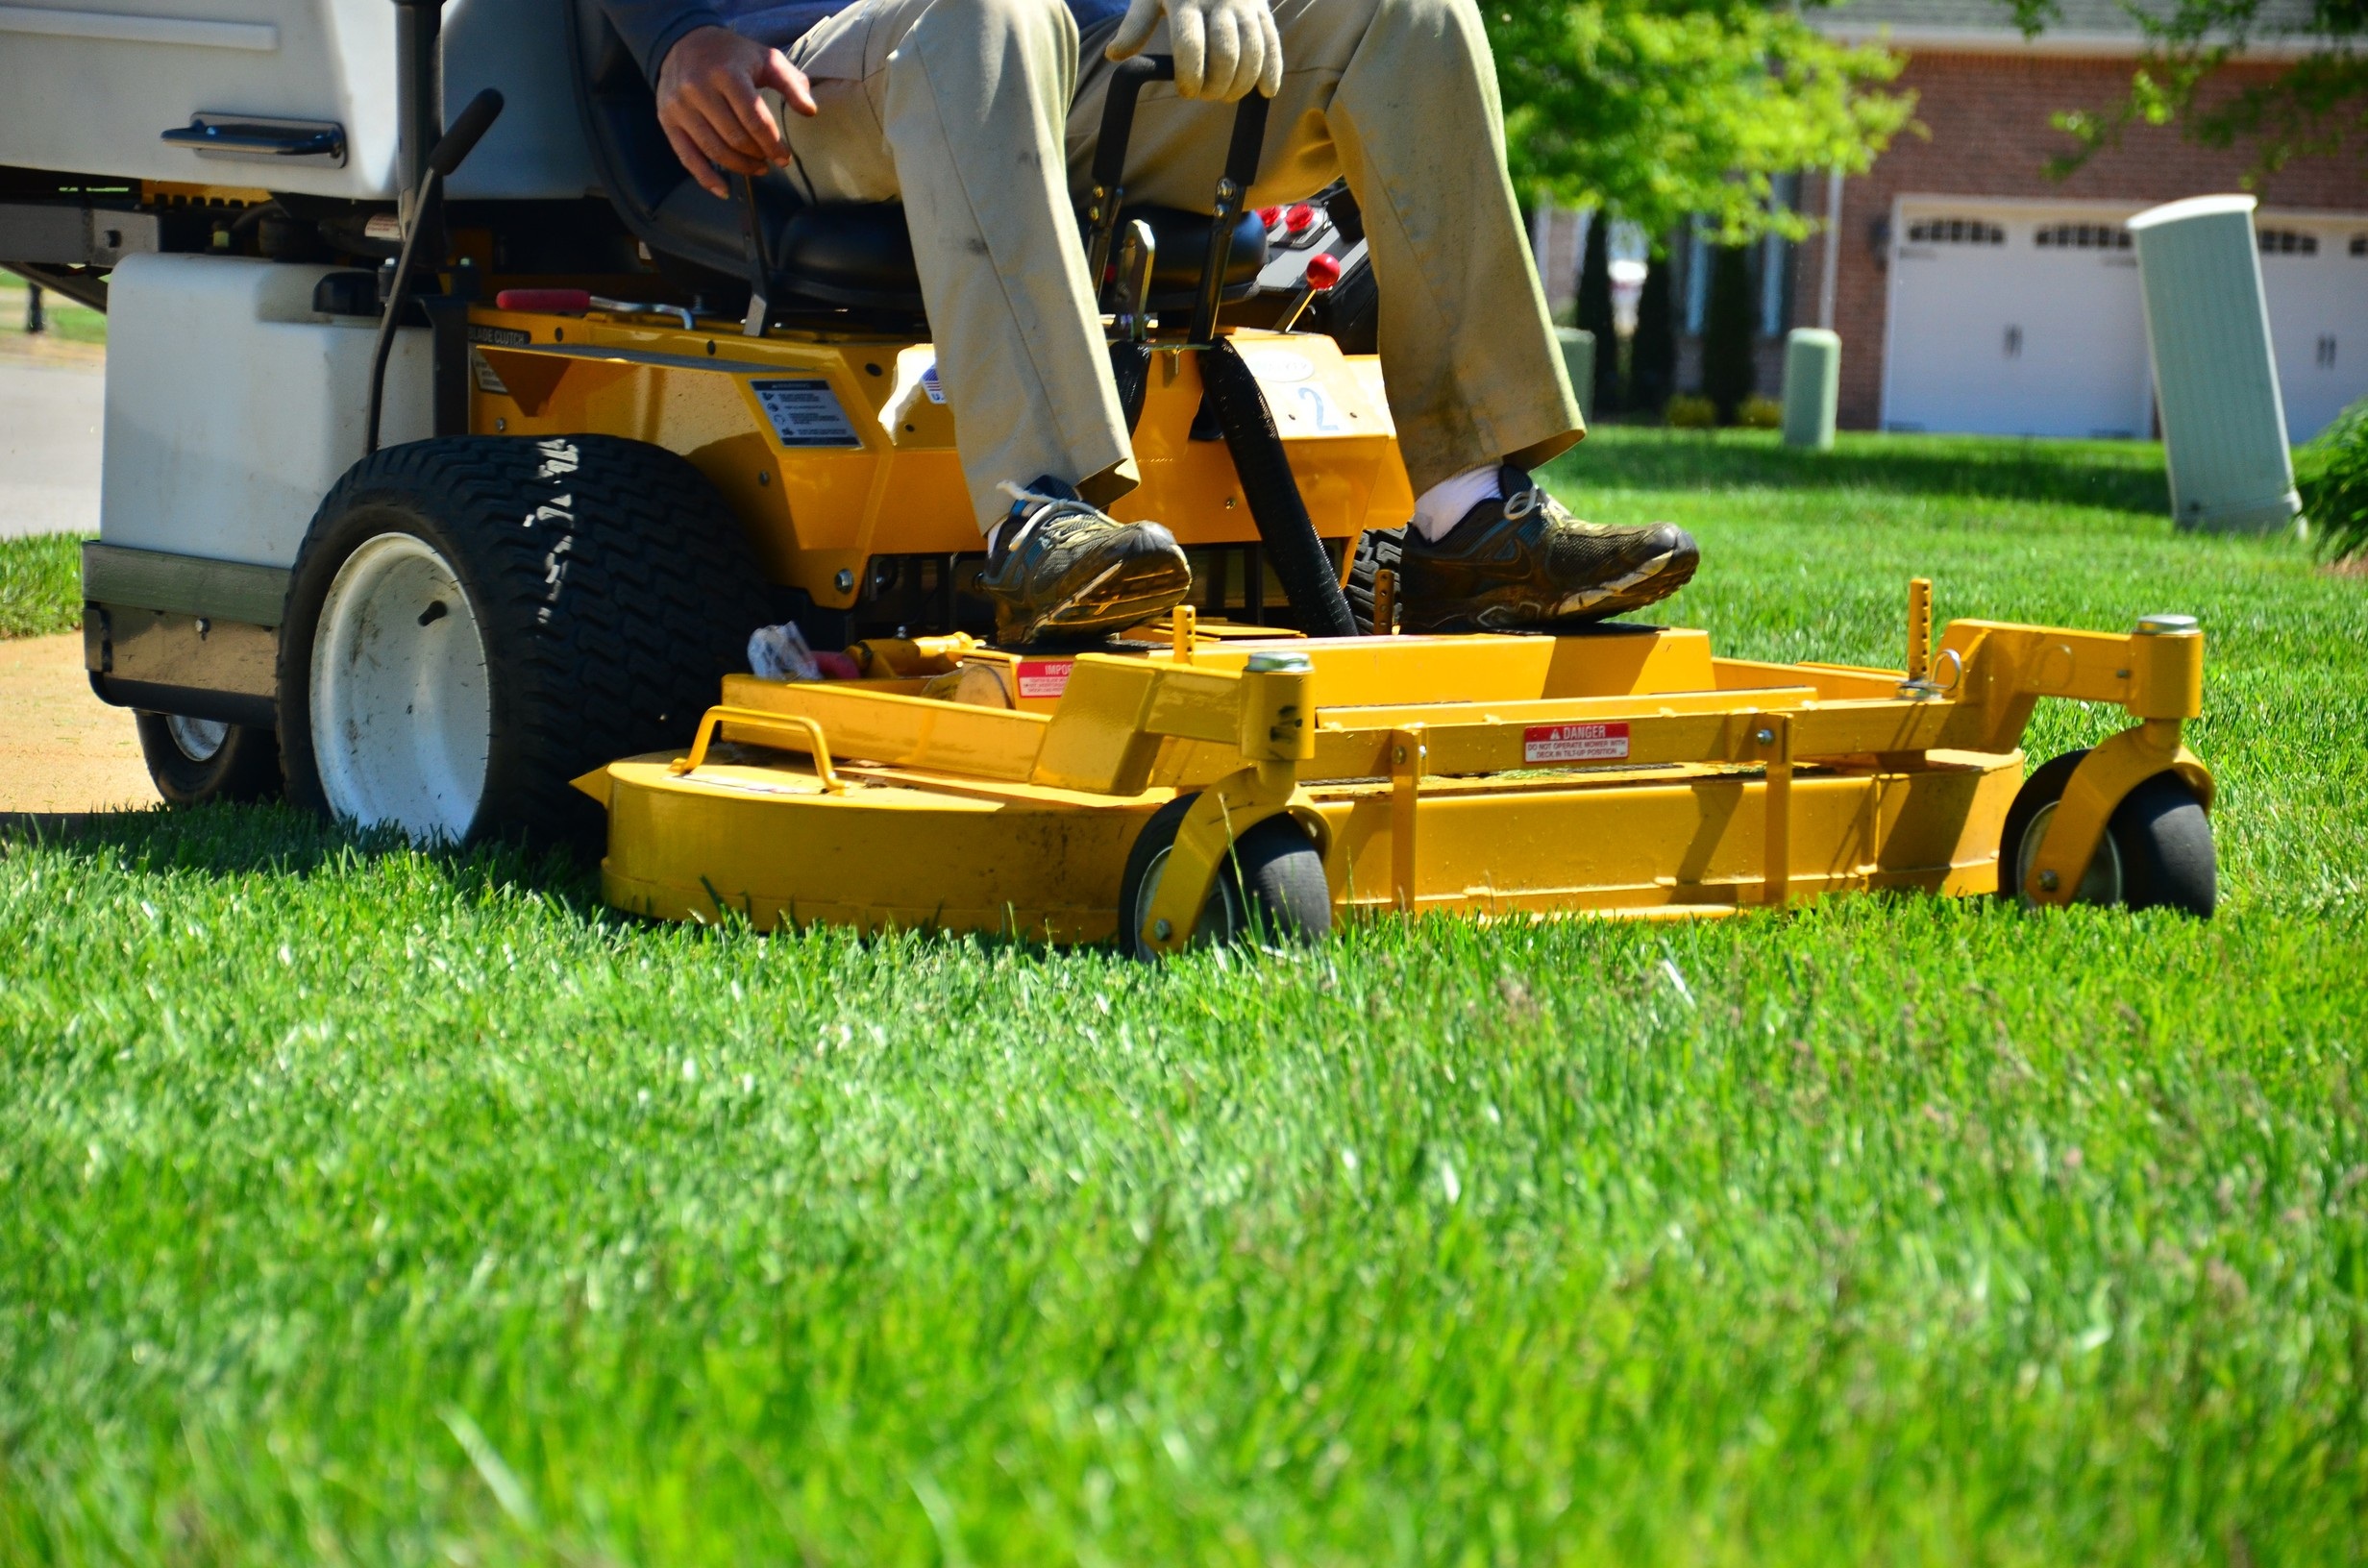 grass-field-lawn-tool-asphalt-vehicle-754943-pxhere.com